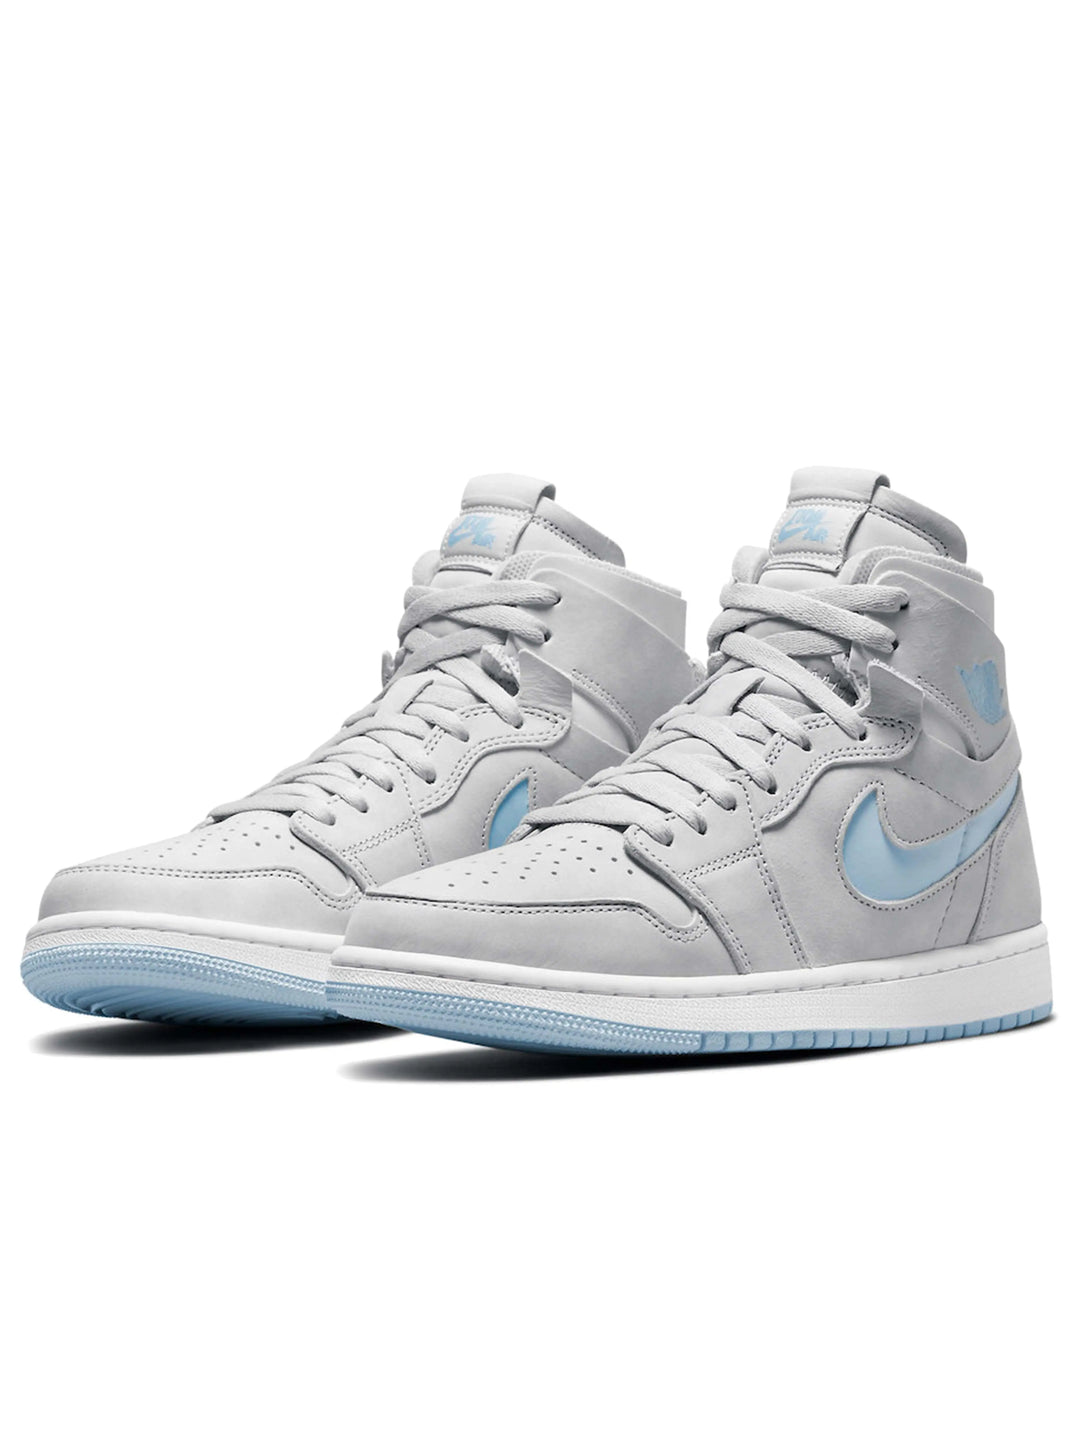 Nike Air Jordan 1 High Zoom CMFT Cool Grey/Baby Blue [W] Prior